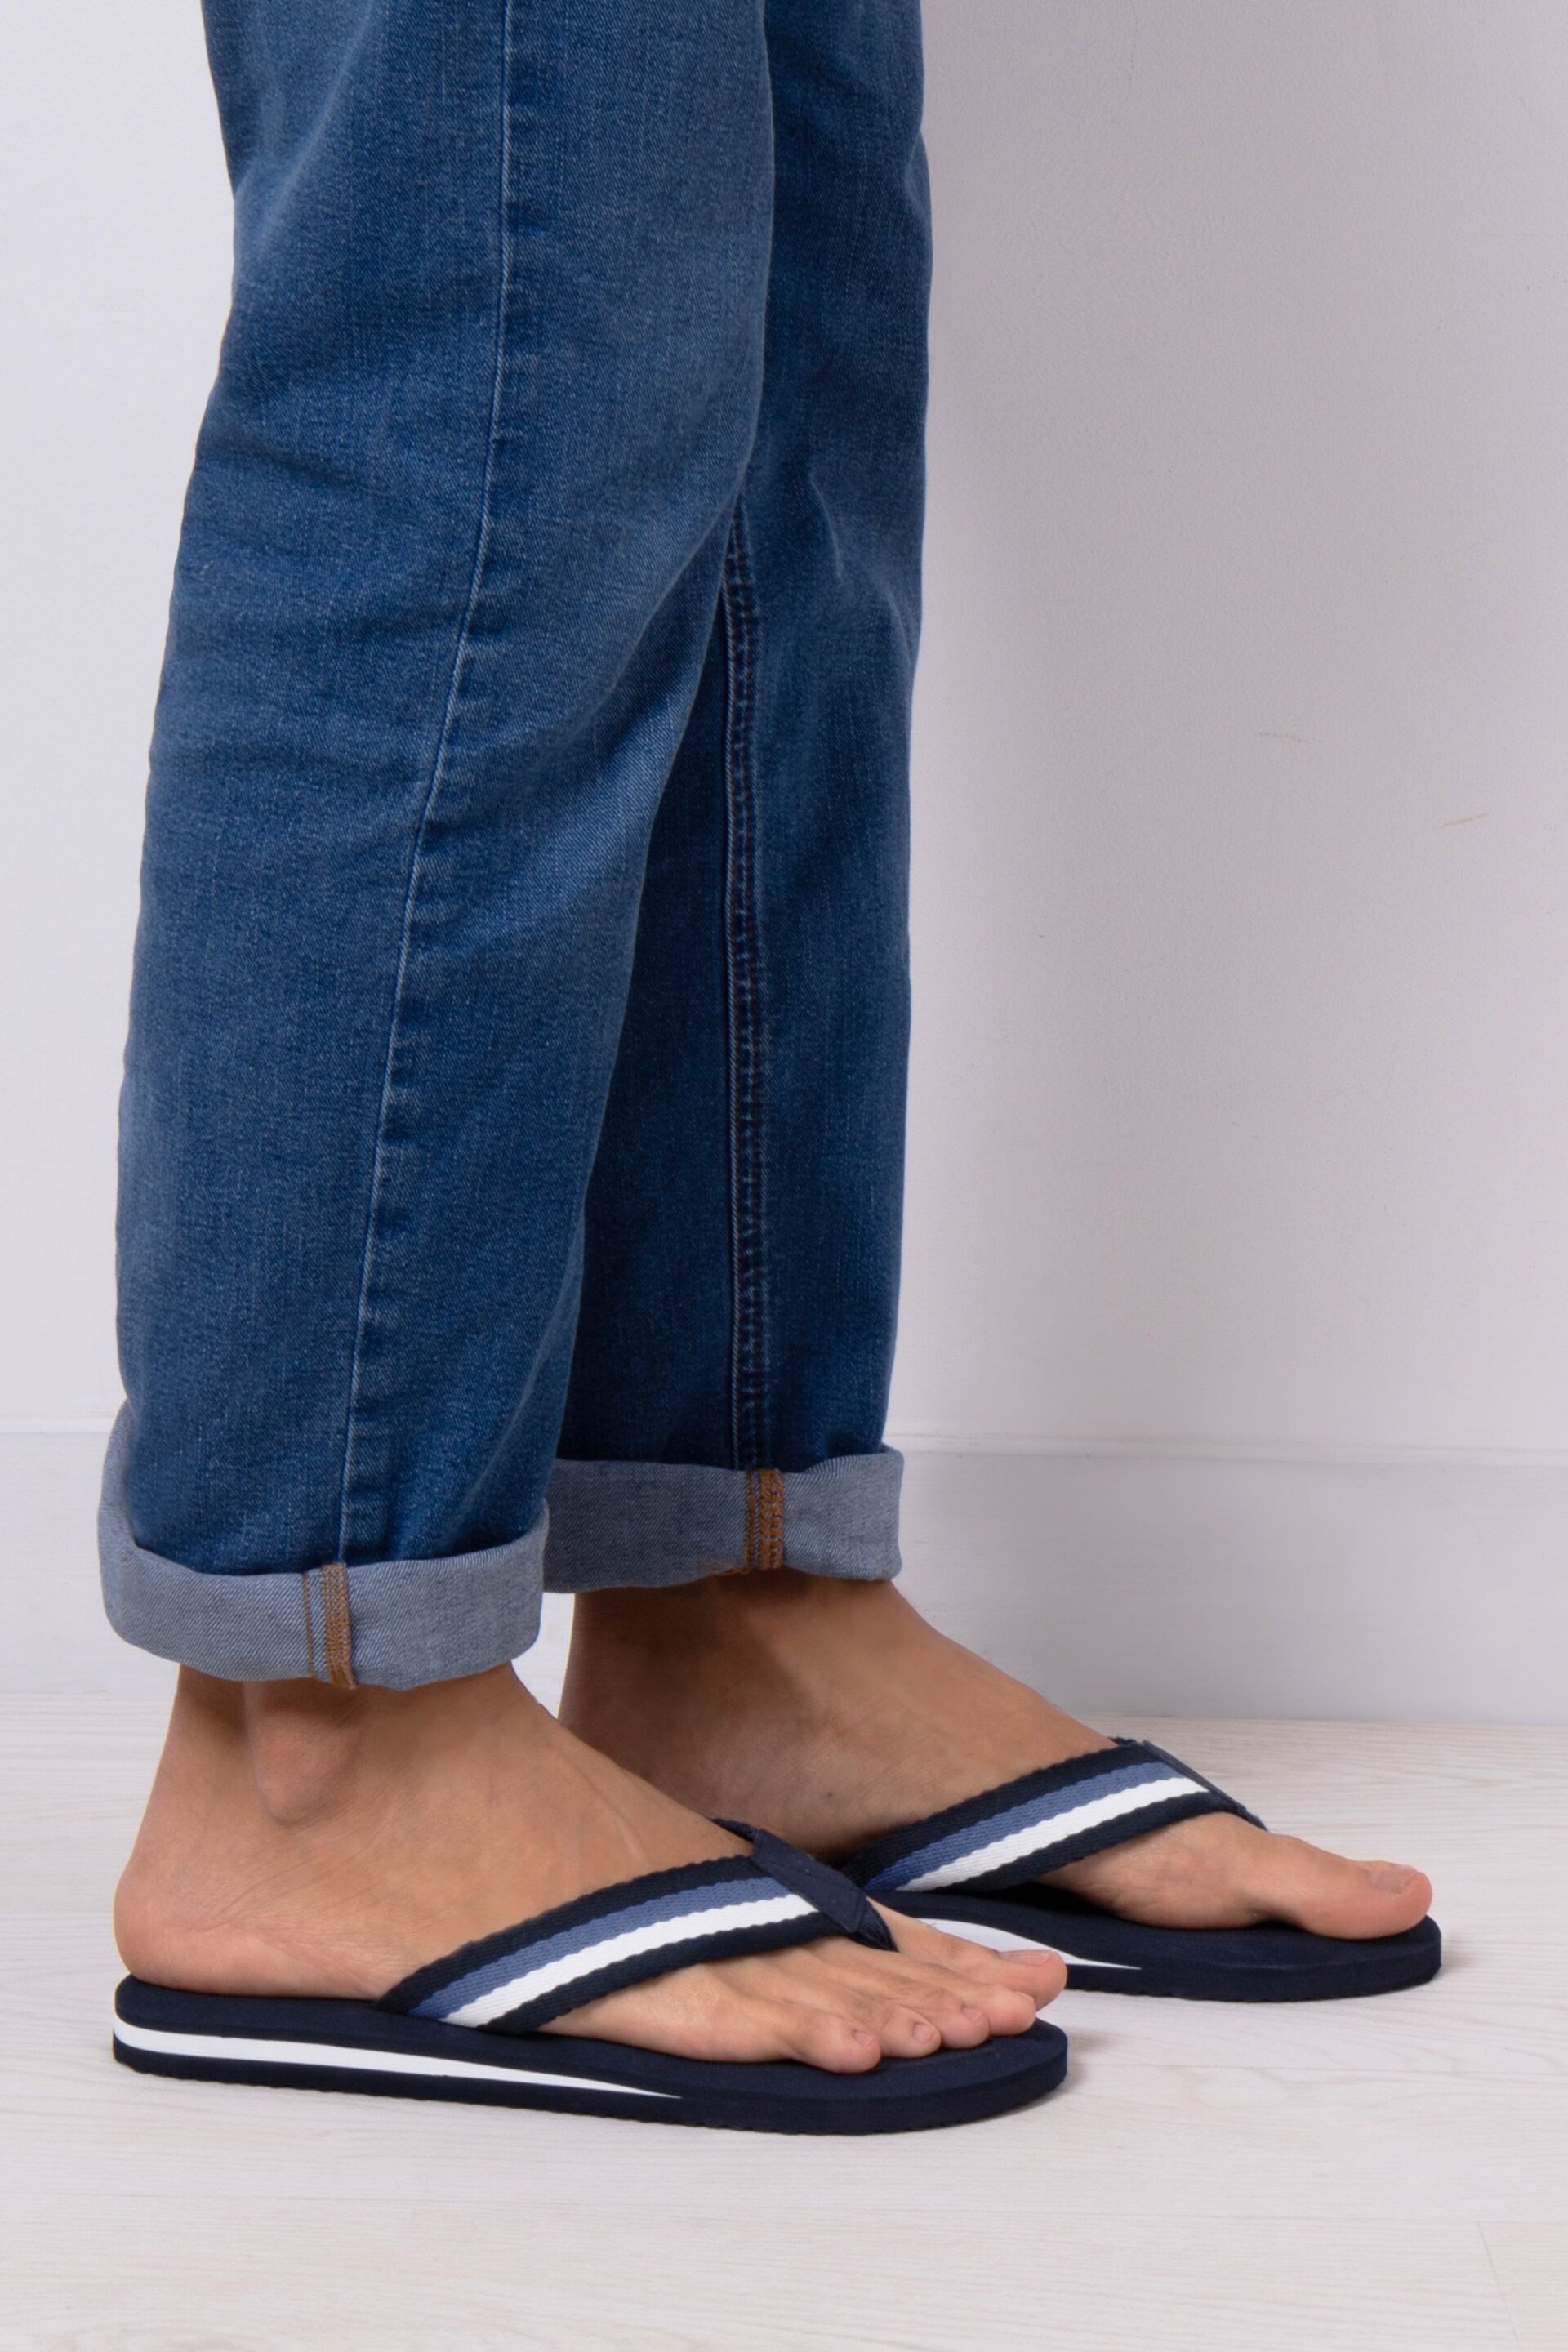 Totes Navy Blue Mens Tape Toe Post Flip Flops Sandals - Image 1 of 5